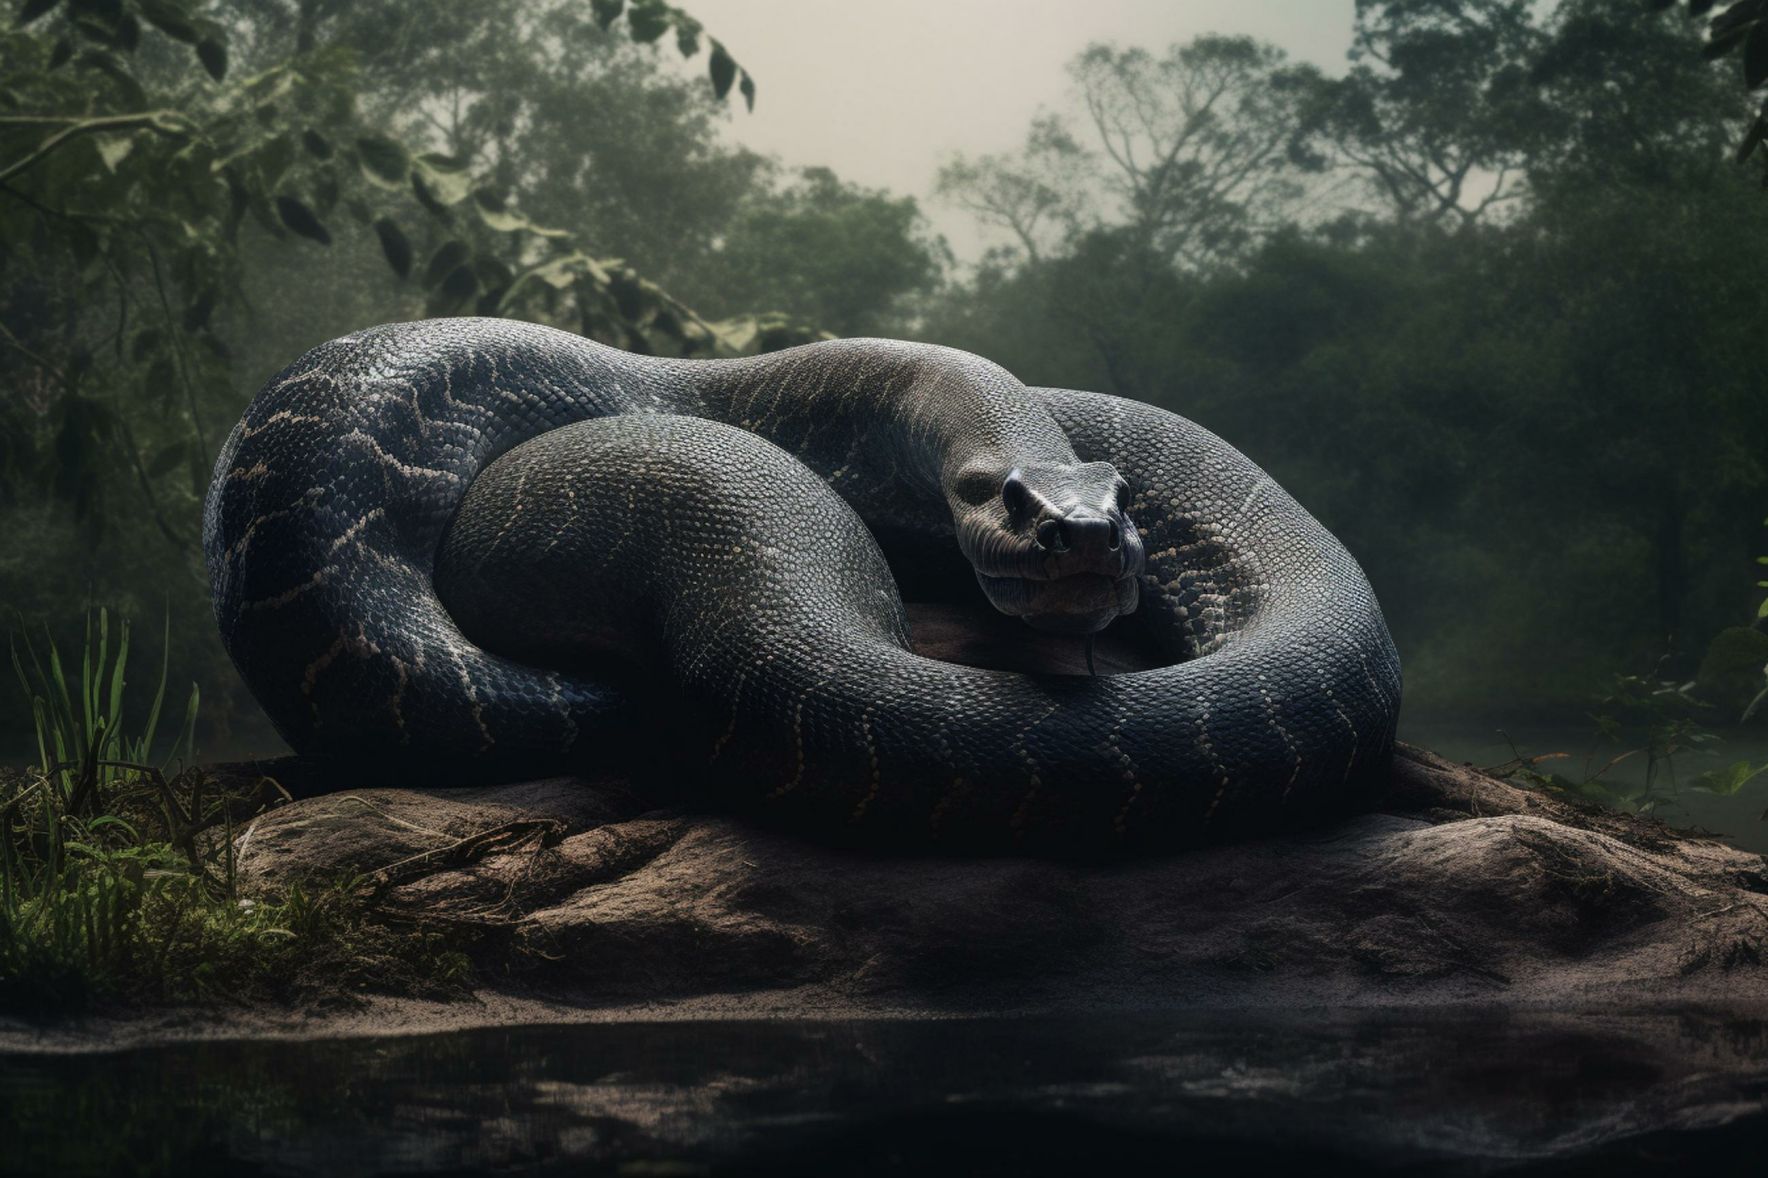 Sola imago Titanoboa, maximus serpens semper est 48ft long